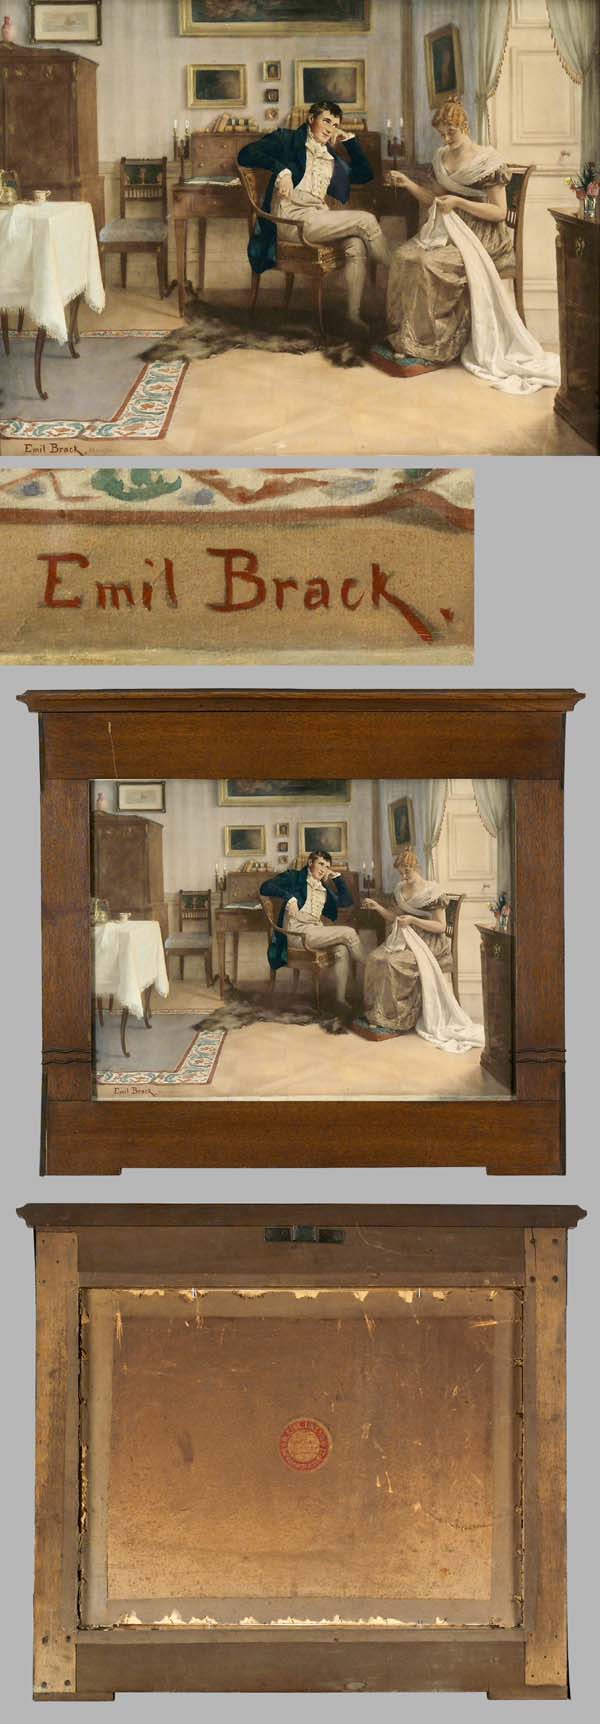 Brack Emil.